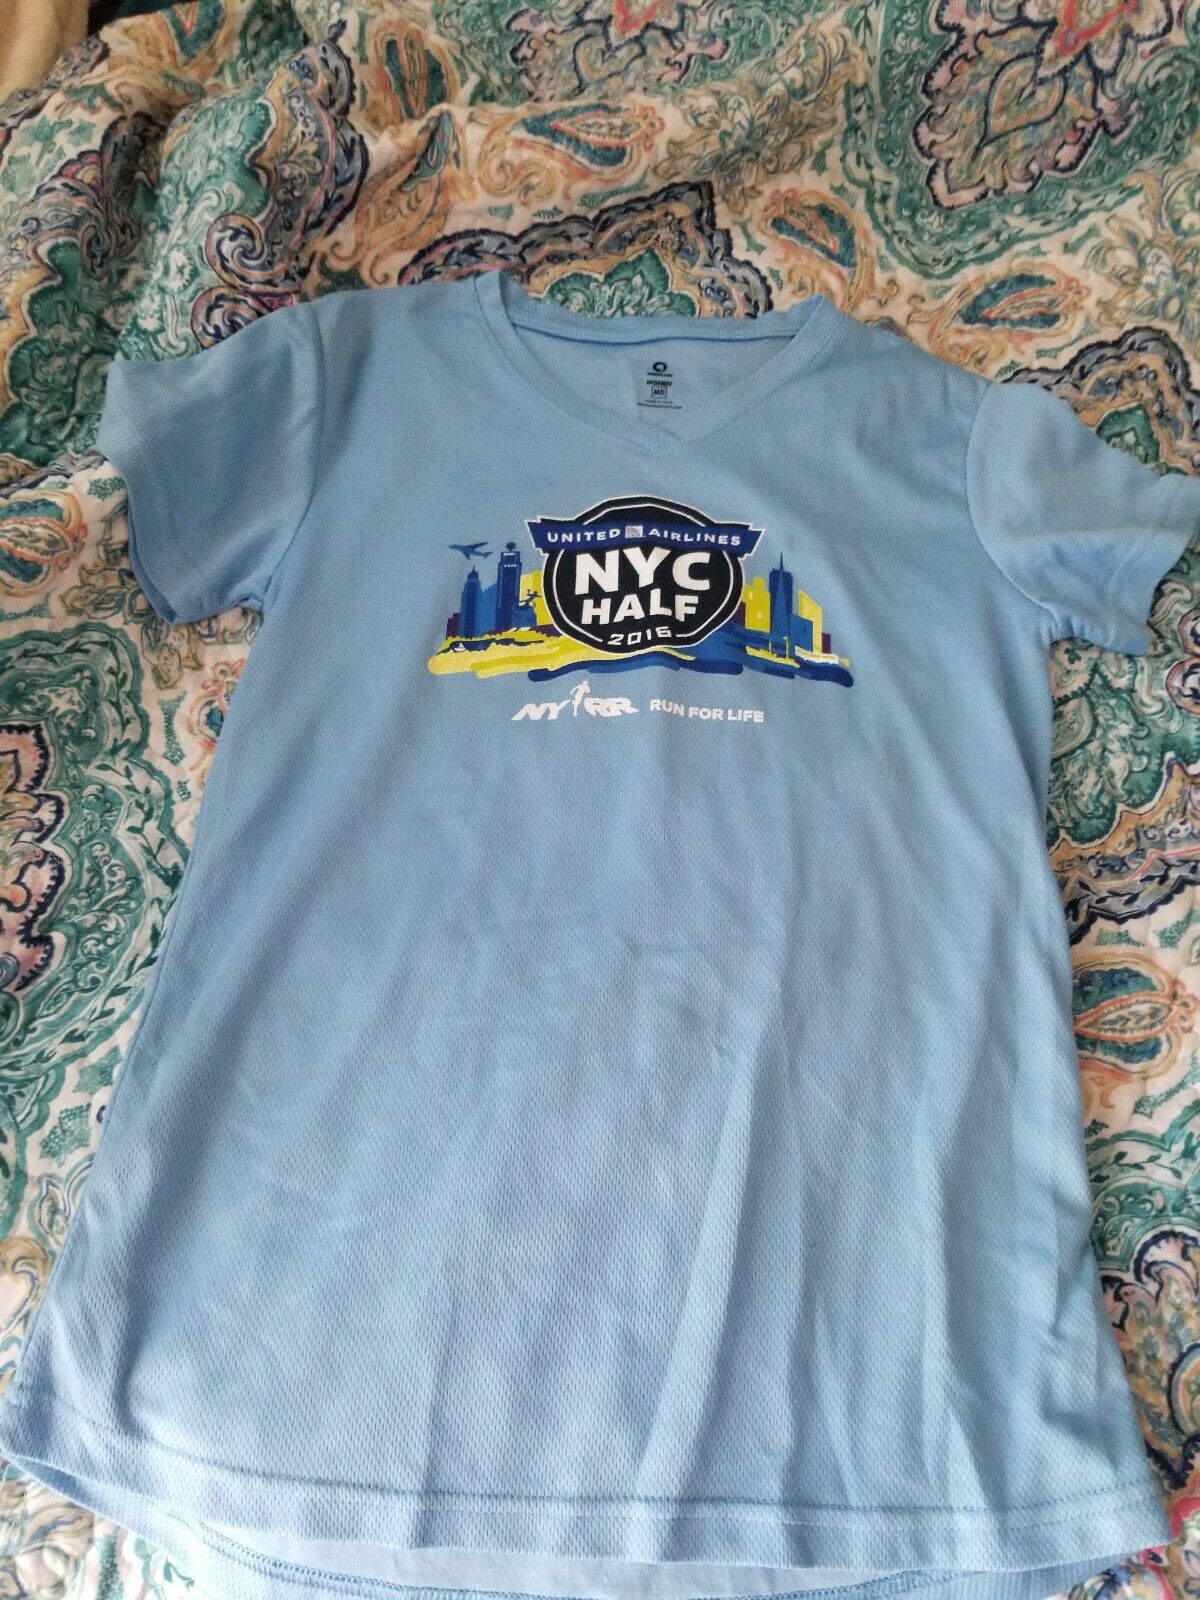 Nyc Half Marathon shirt Medium M